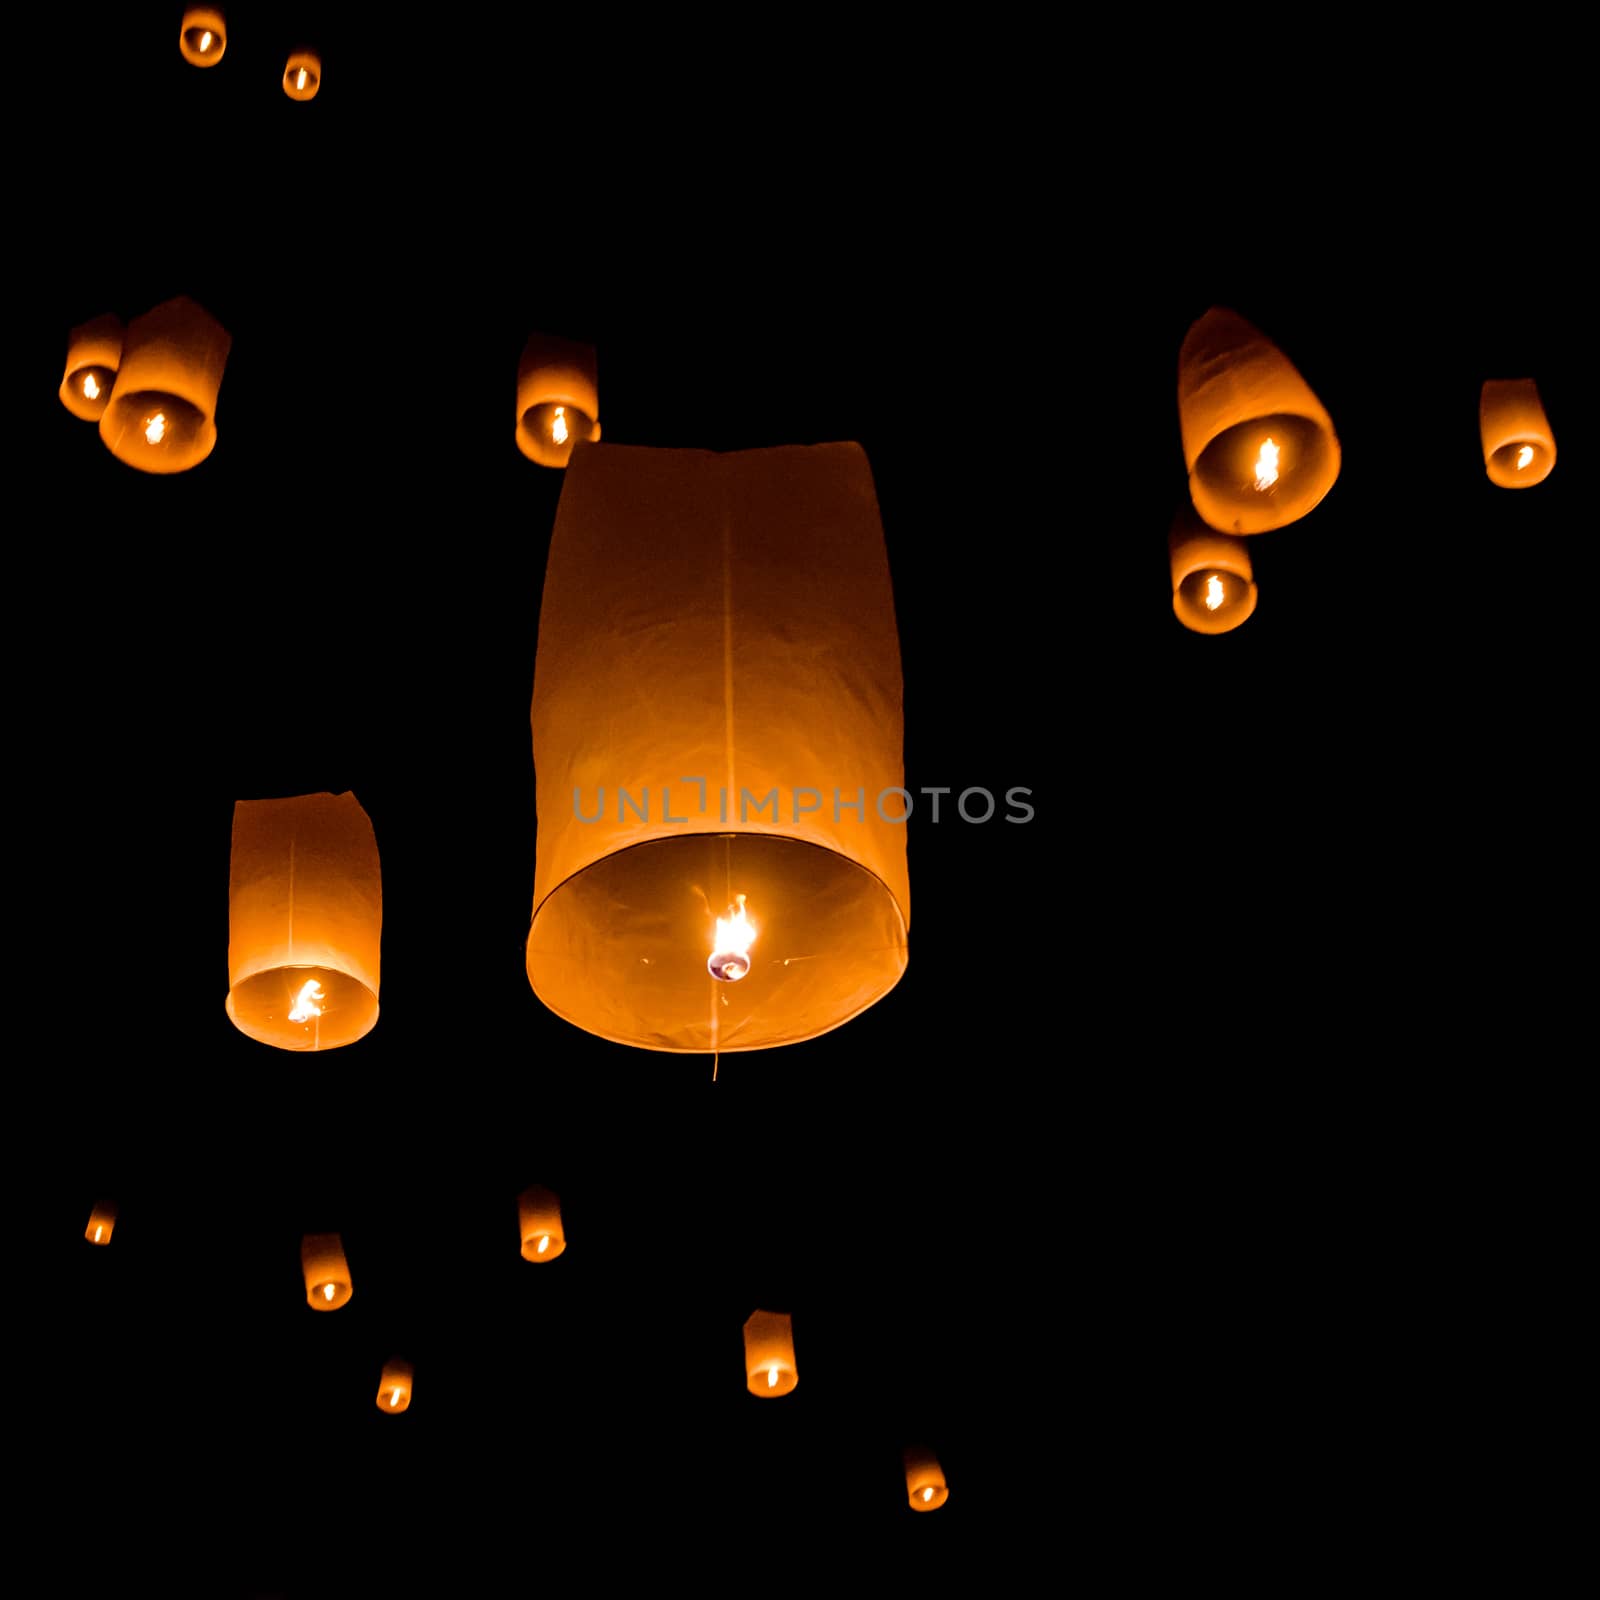 Floating lantern, Yi Peng Balloon Festival in Chiangmai Thailand